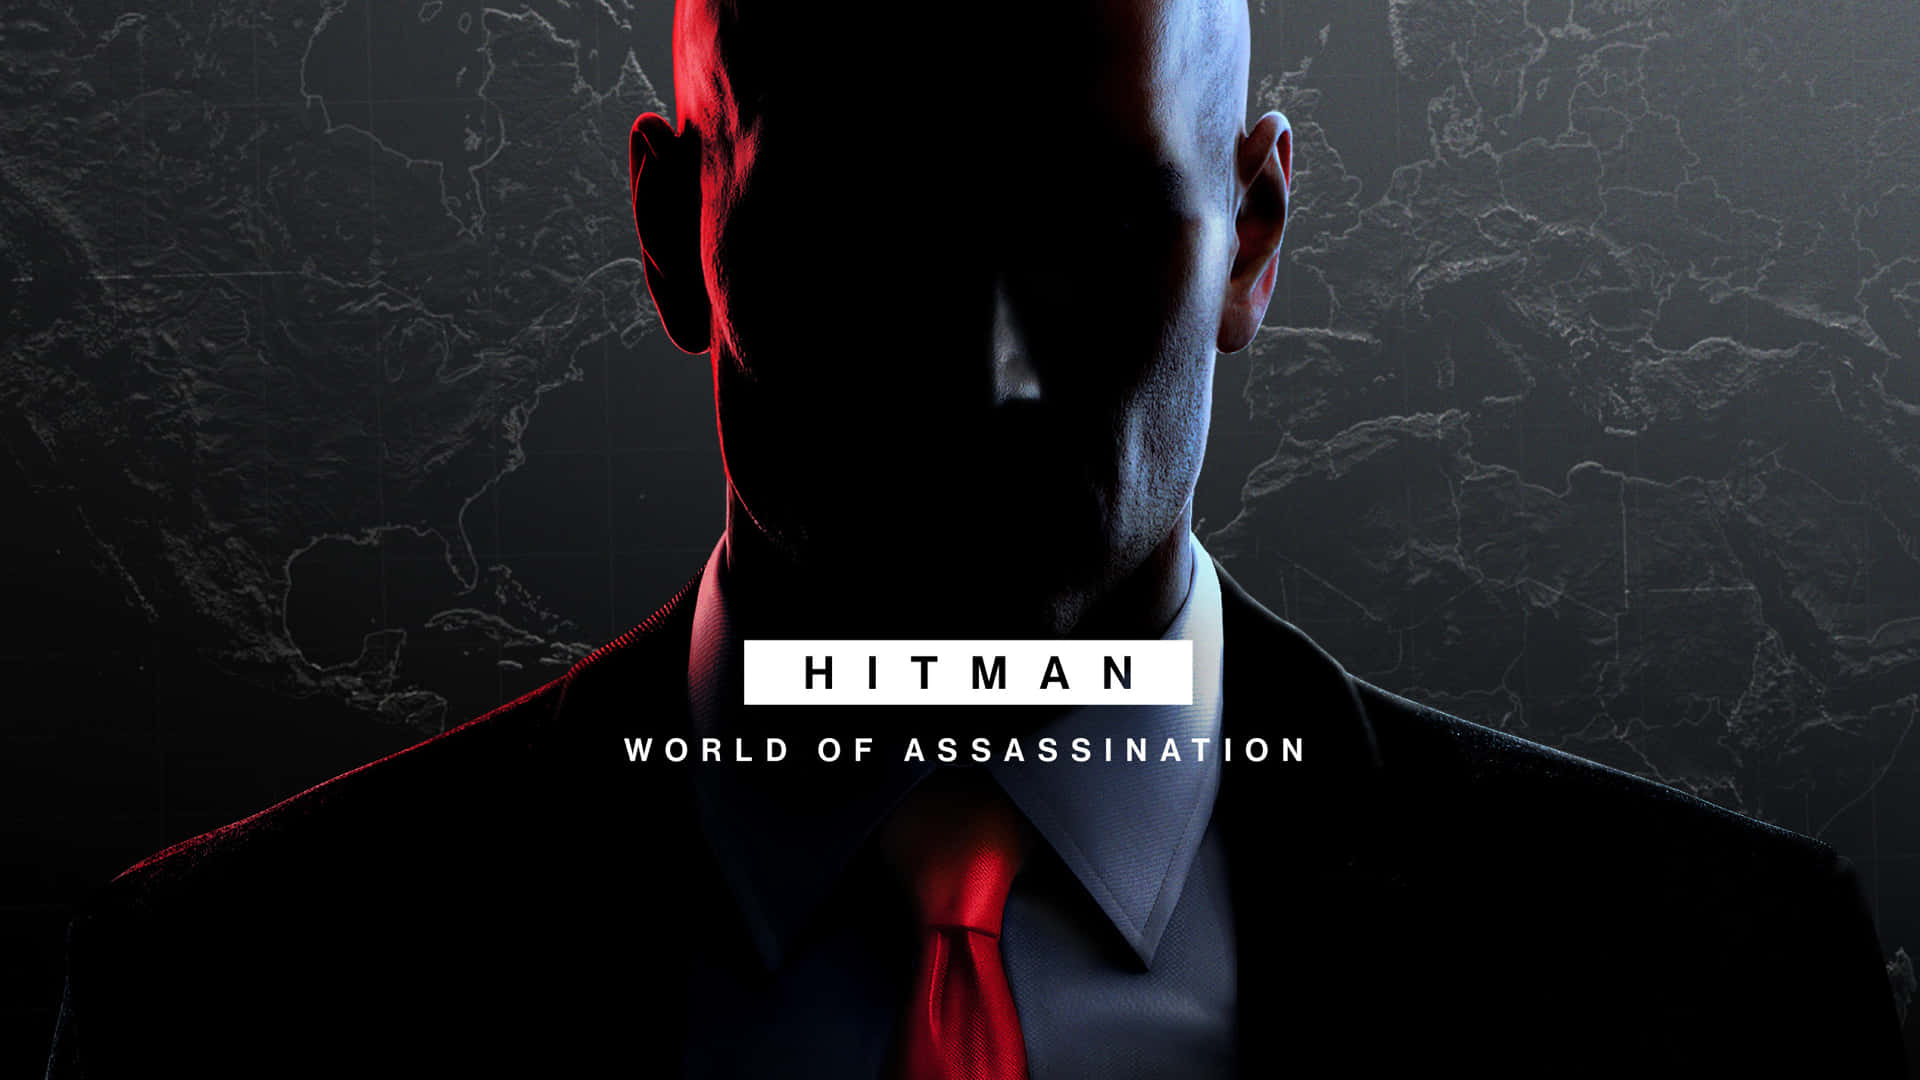 Agent 47 returns in the hit action sequel Hitman 2